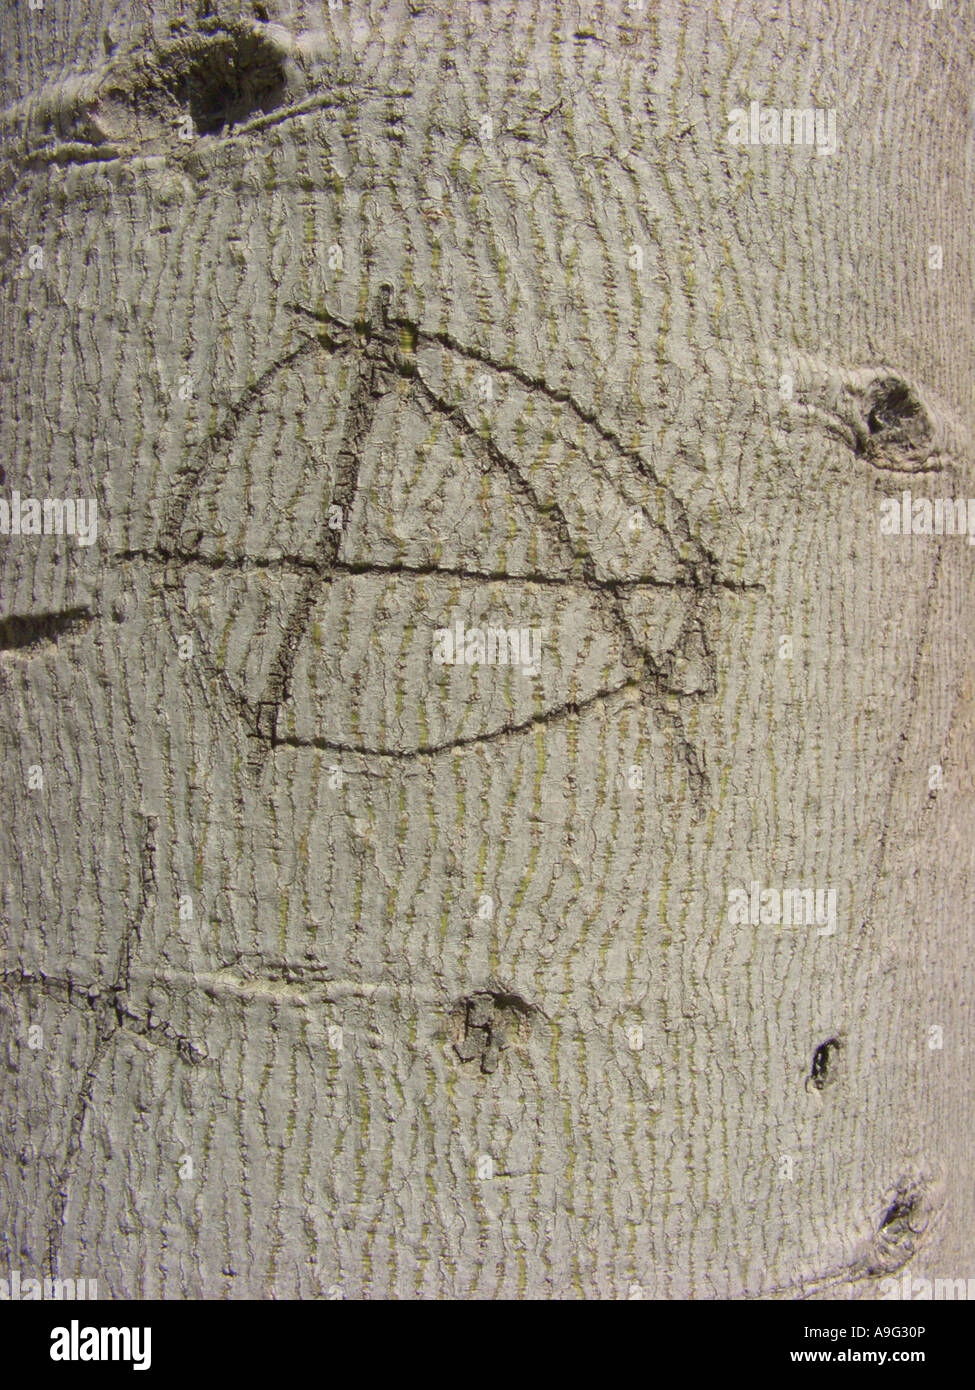 bottle tree (Brachychiton populneus), bark with anarchy sign Stock Photo